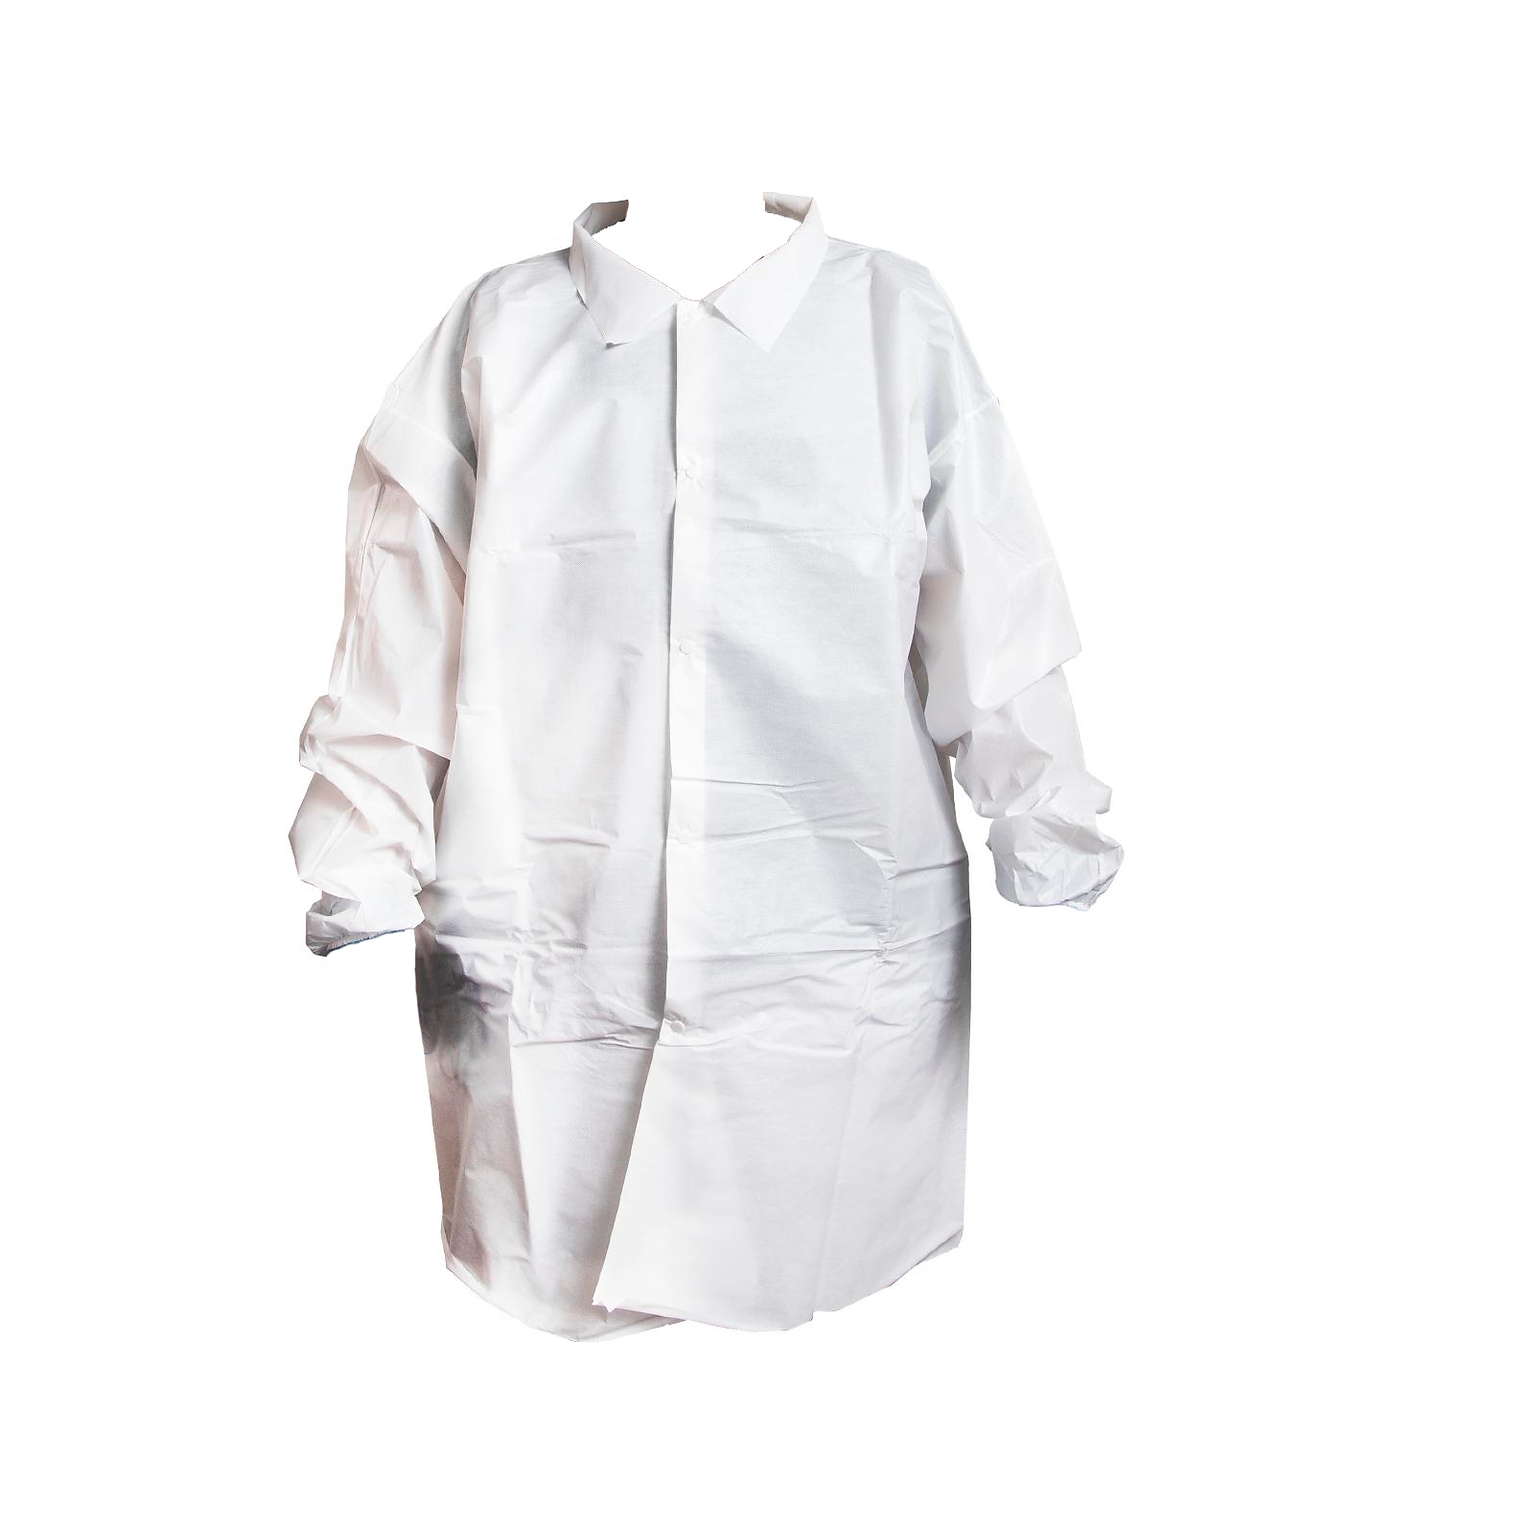 Unimed 3XL Lab Coat, White, 30/Carton (OLCM8973XL)